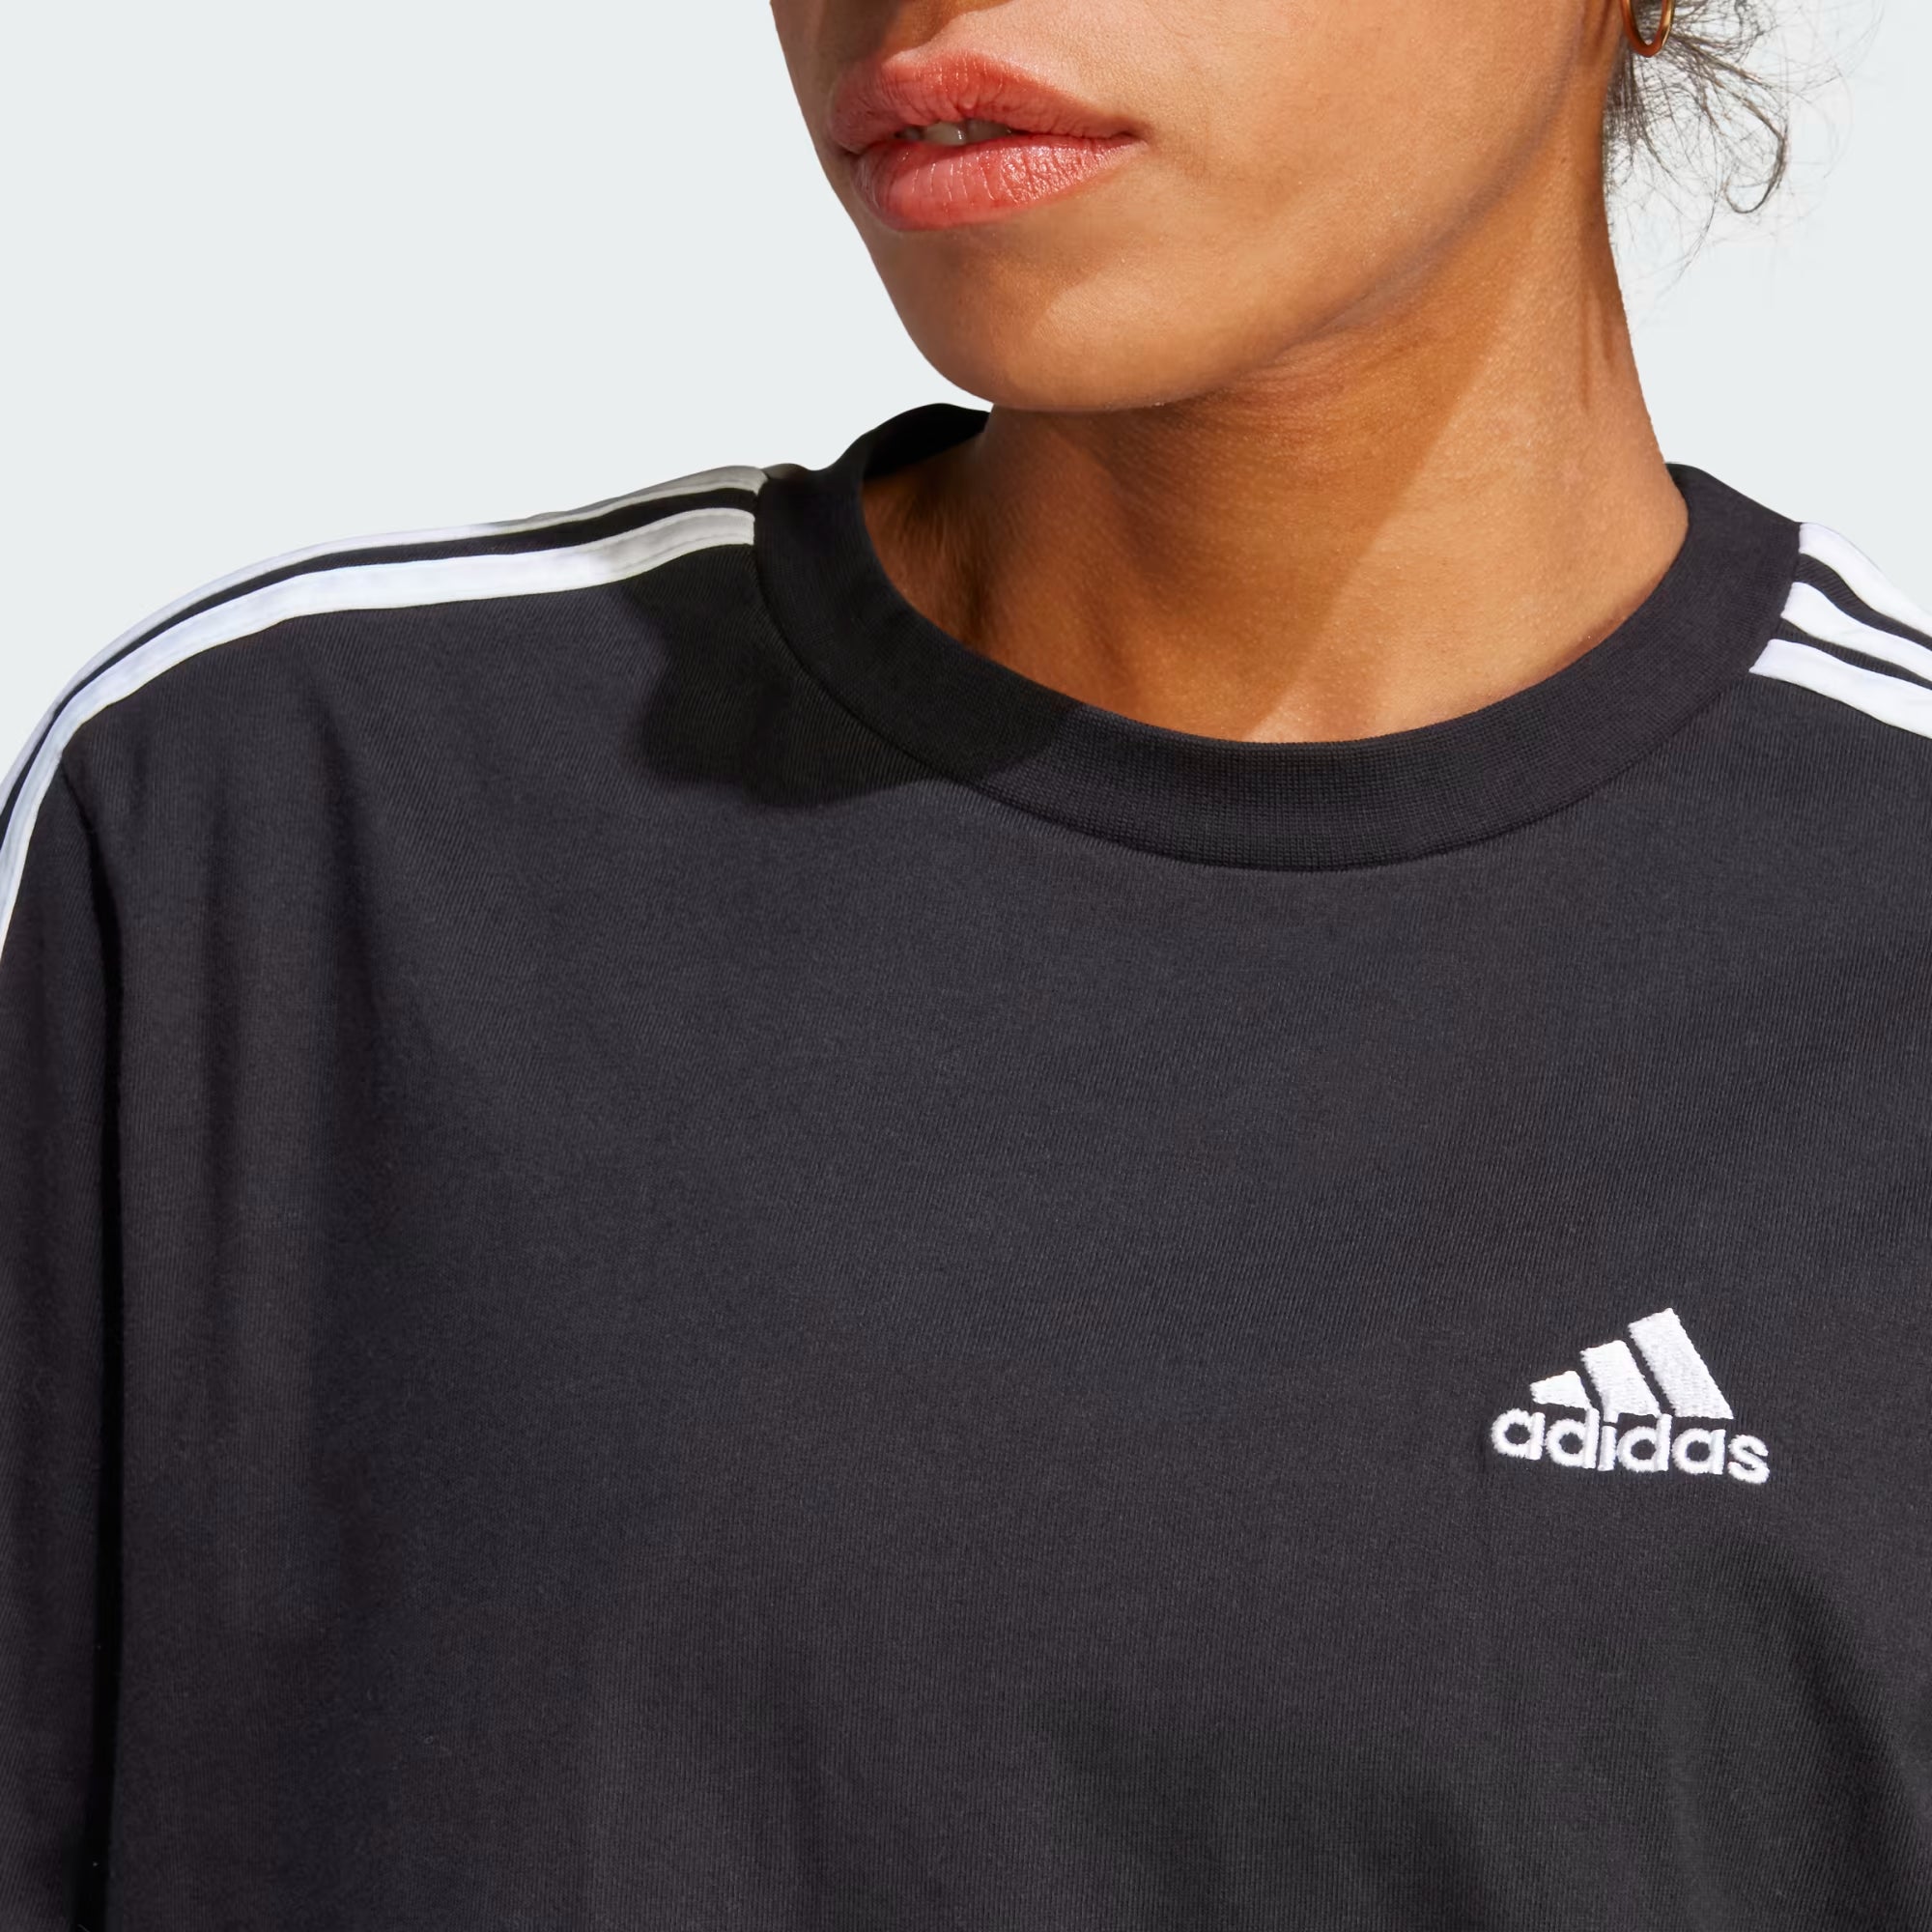 Adidas Essentials 3 Stripes Single Jersey Boyfriend Tee Dress - Women